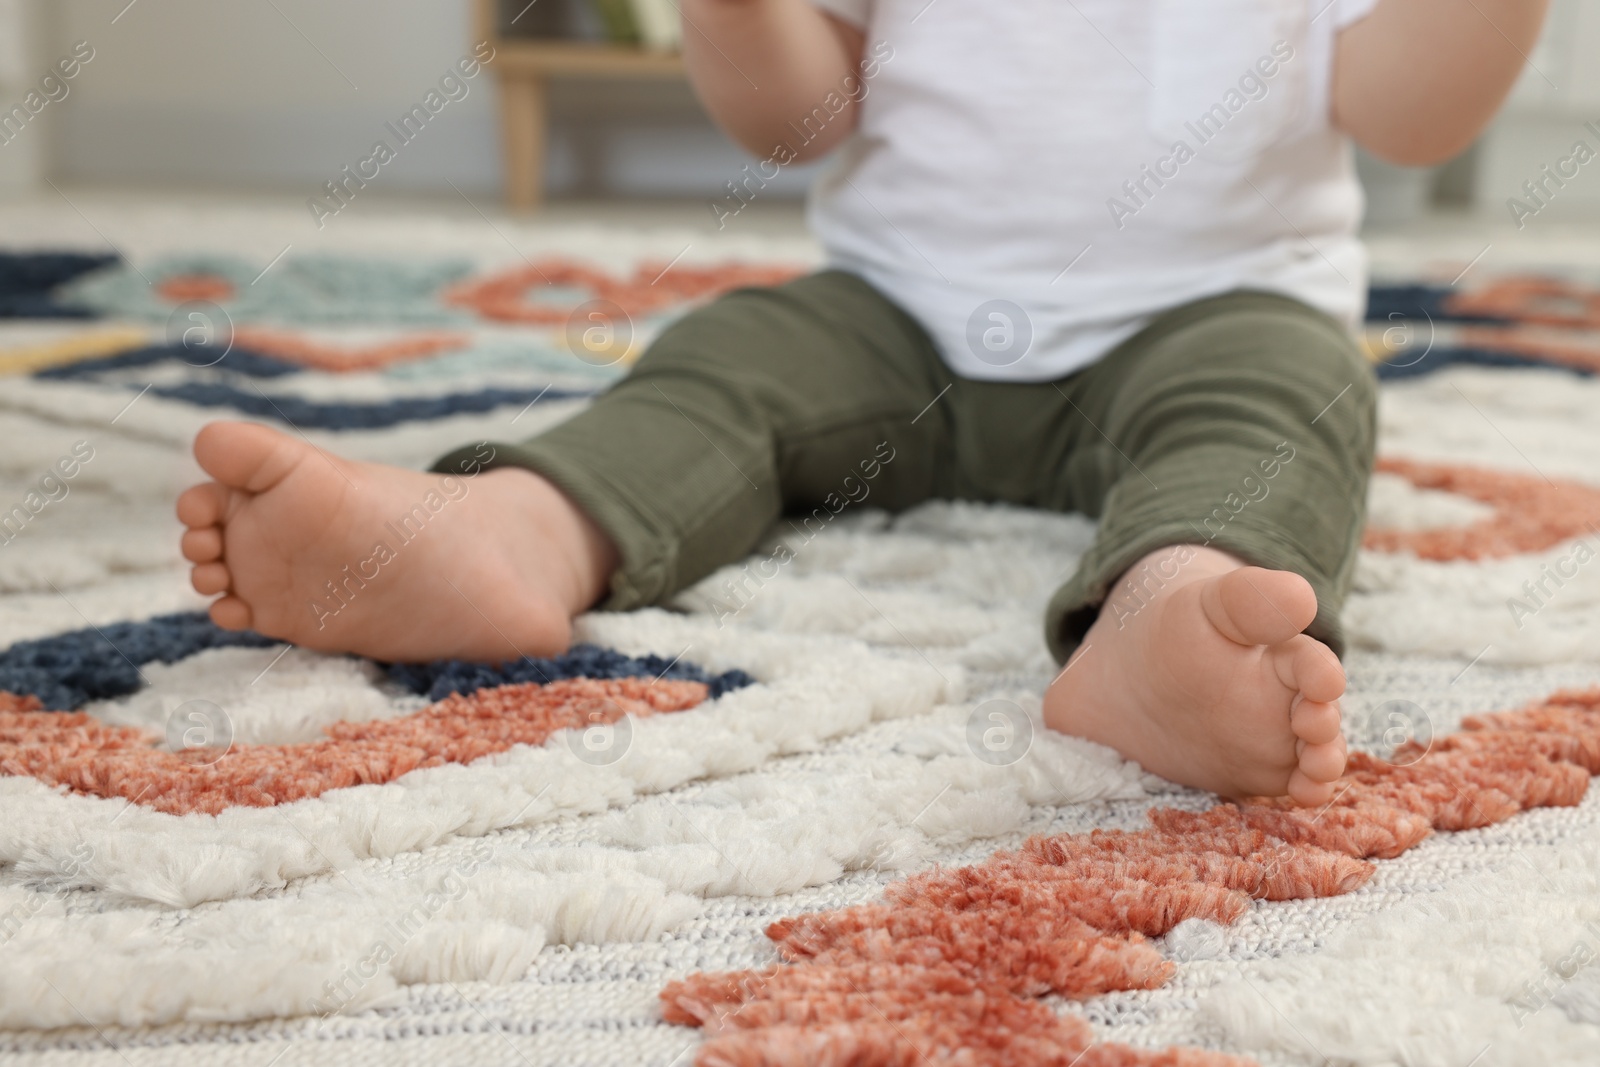 Photo of Baby sitting on soft carpet indoors, closeup